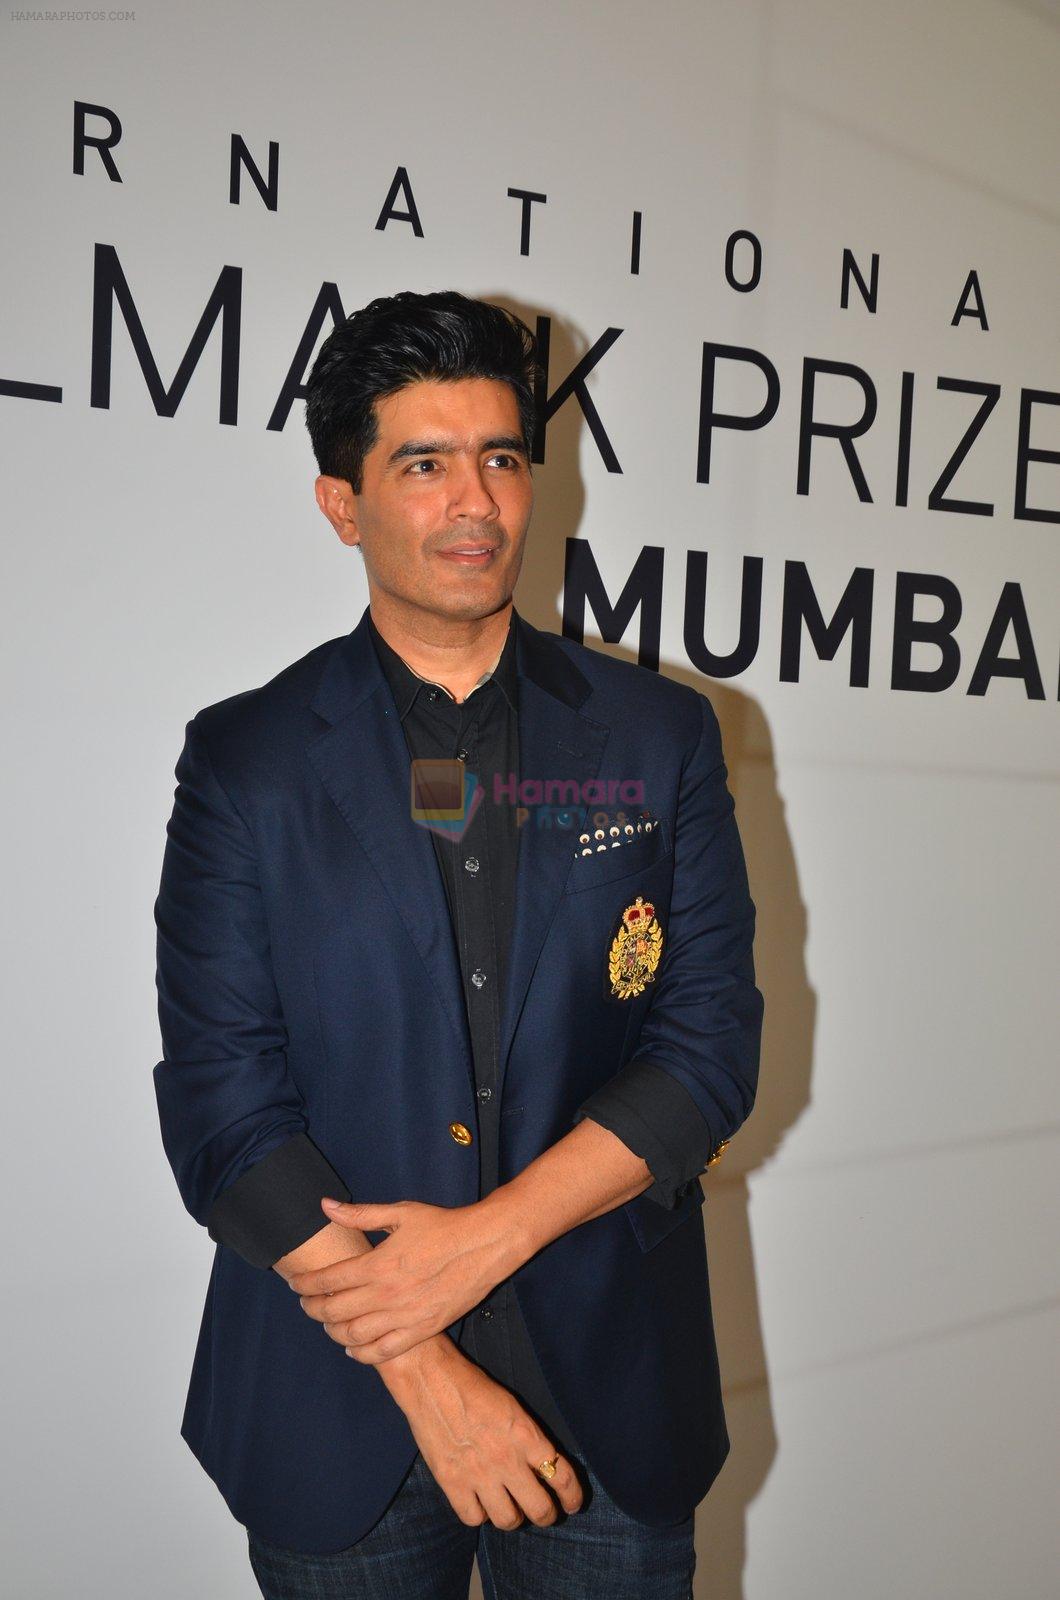 Manish Malhotra at International Woolmark prize mumbai on 15th July 2016